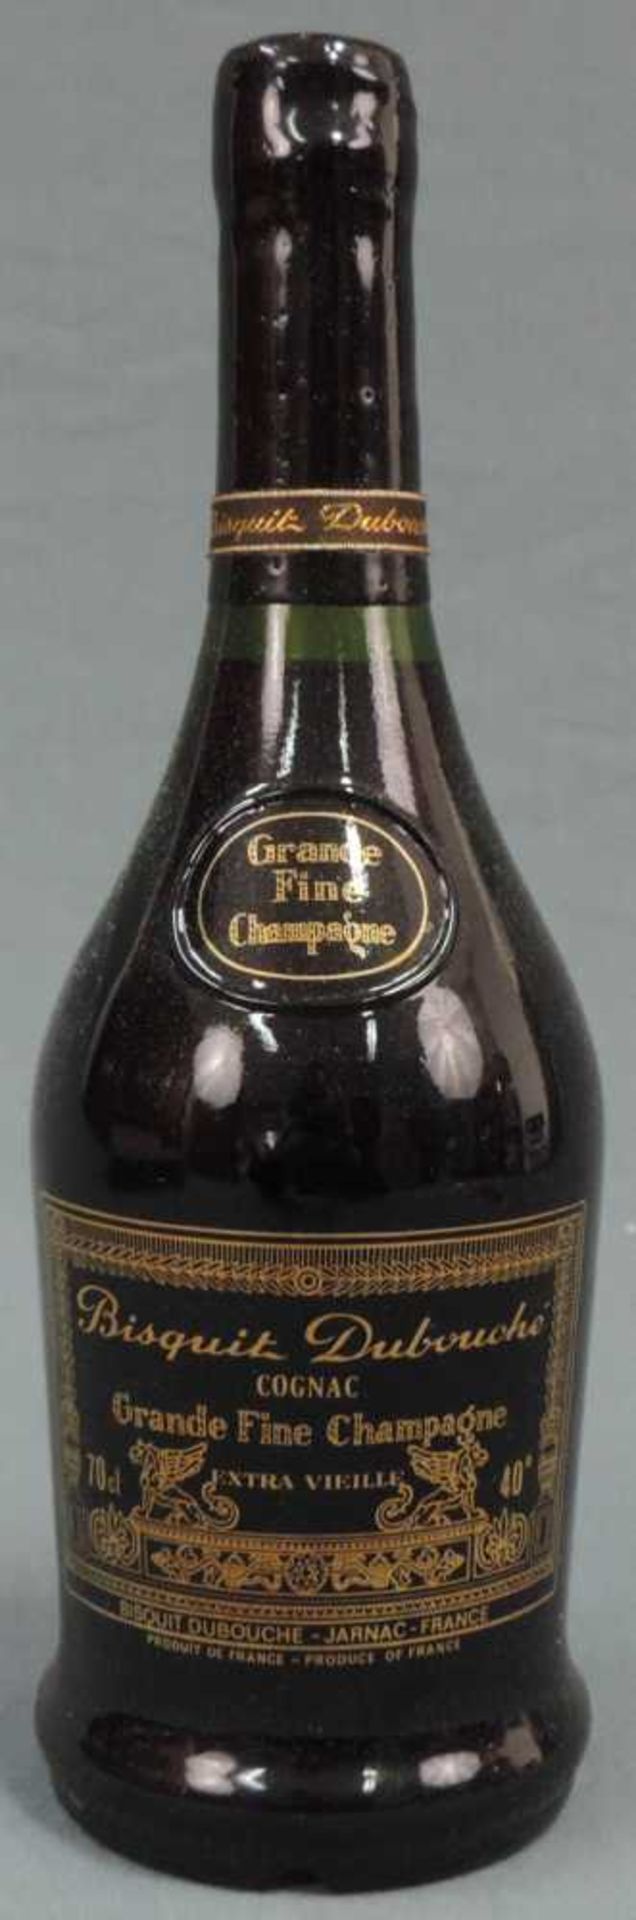 Grande Fine Champagne, Bisquit Dubouche Cognac Grande Fine Champagne, Extra Vieille. 40%, 70cl. - Image 6 of 10